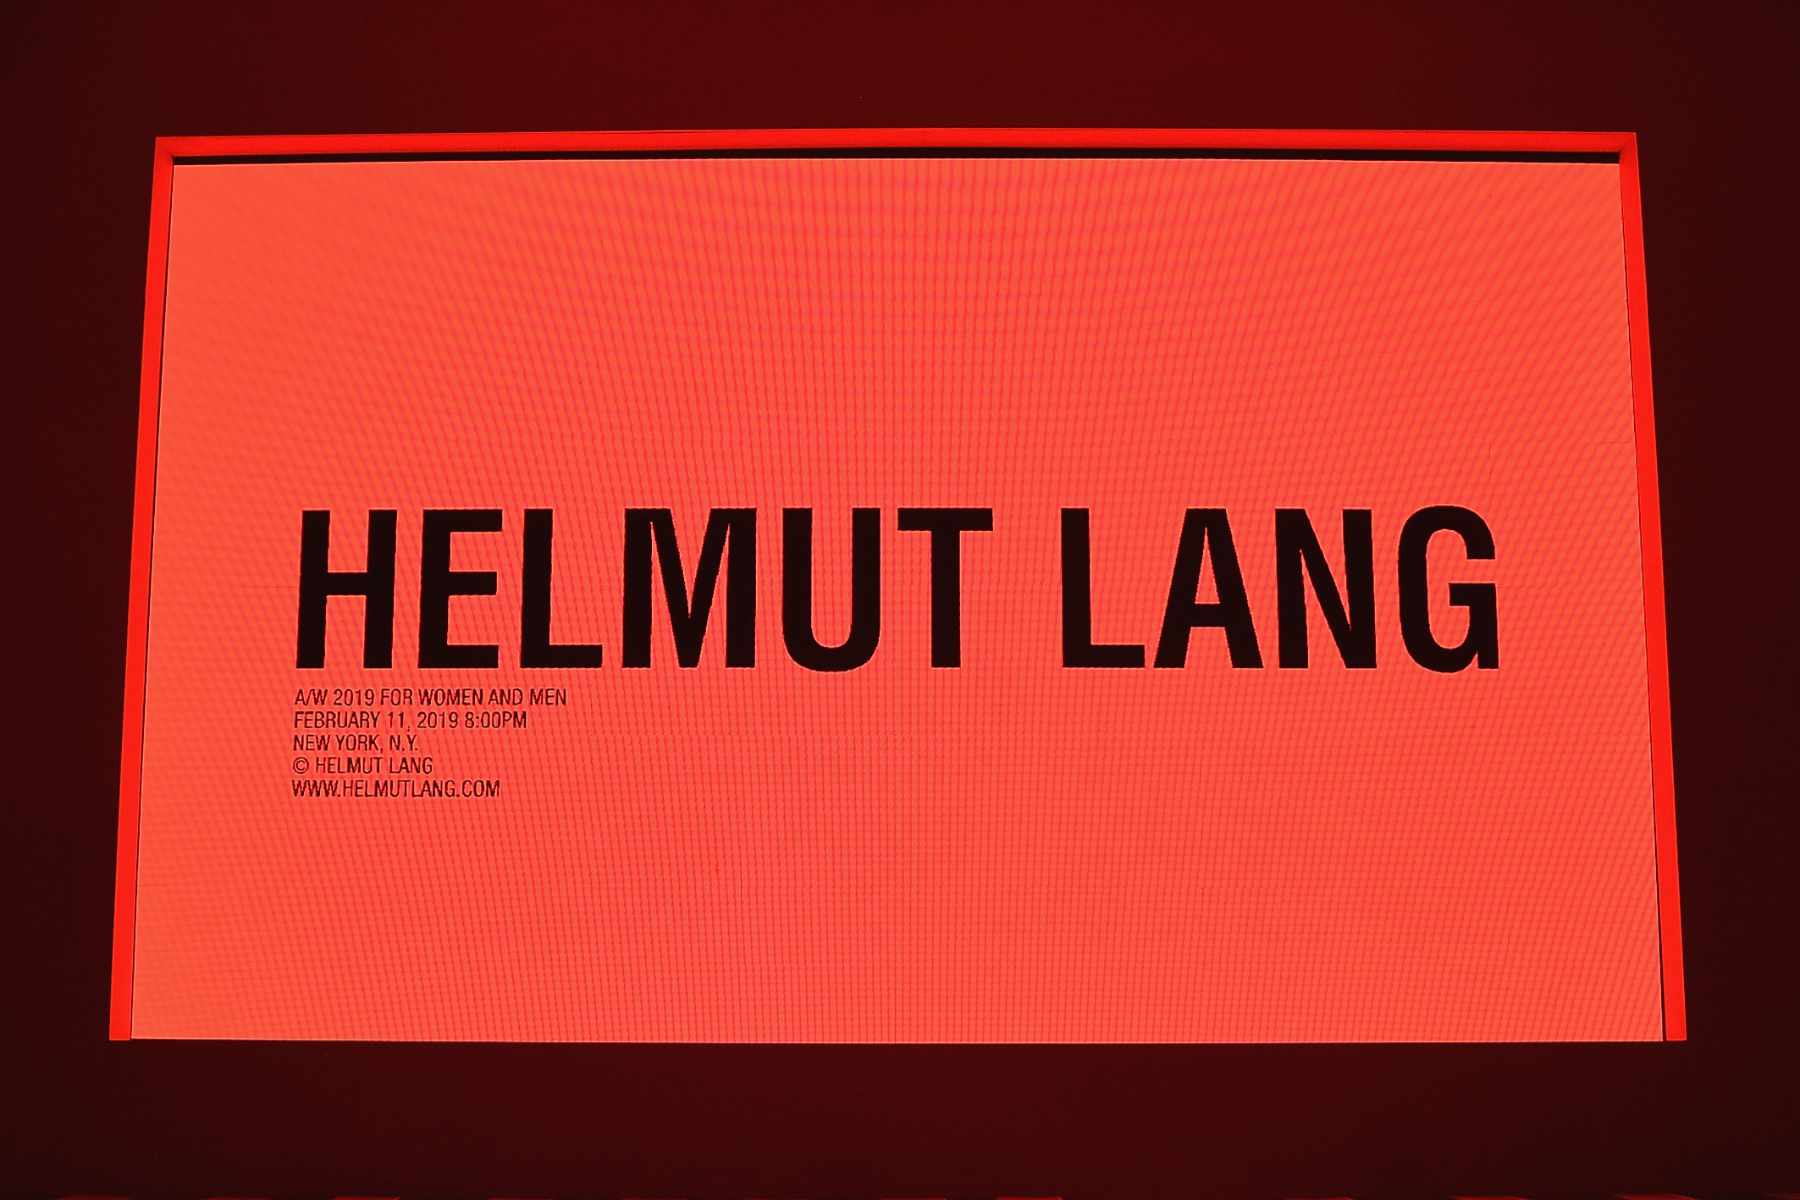 Helmut Lang names Mark Howard Thomas as creative director of menswear